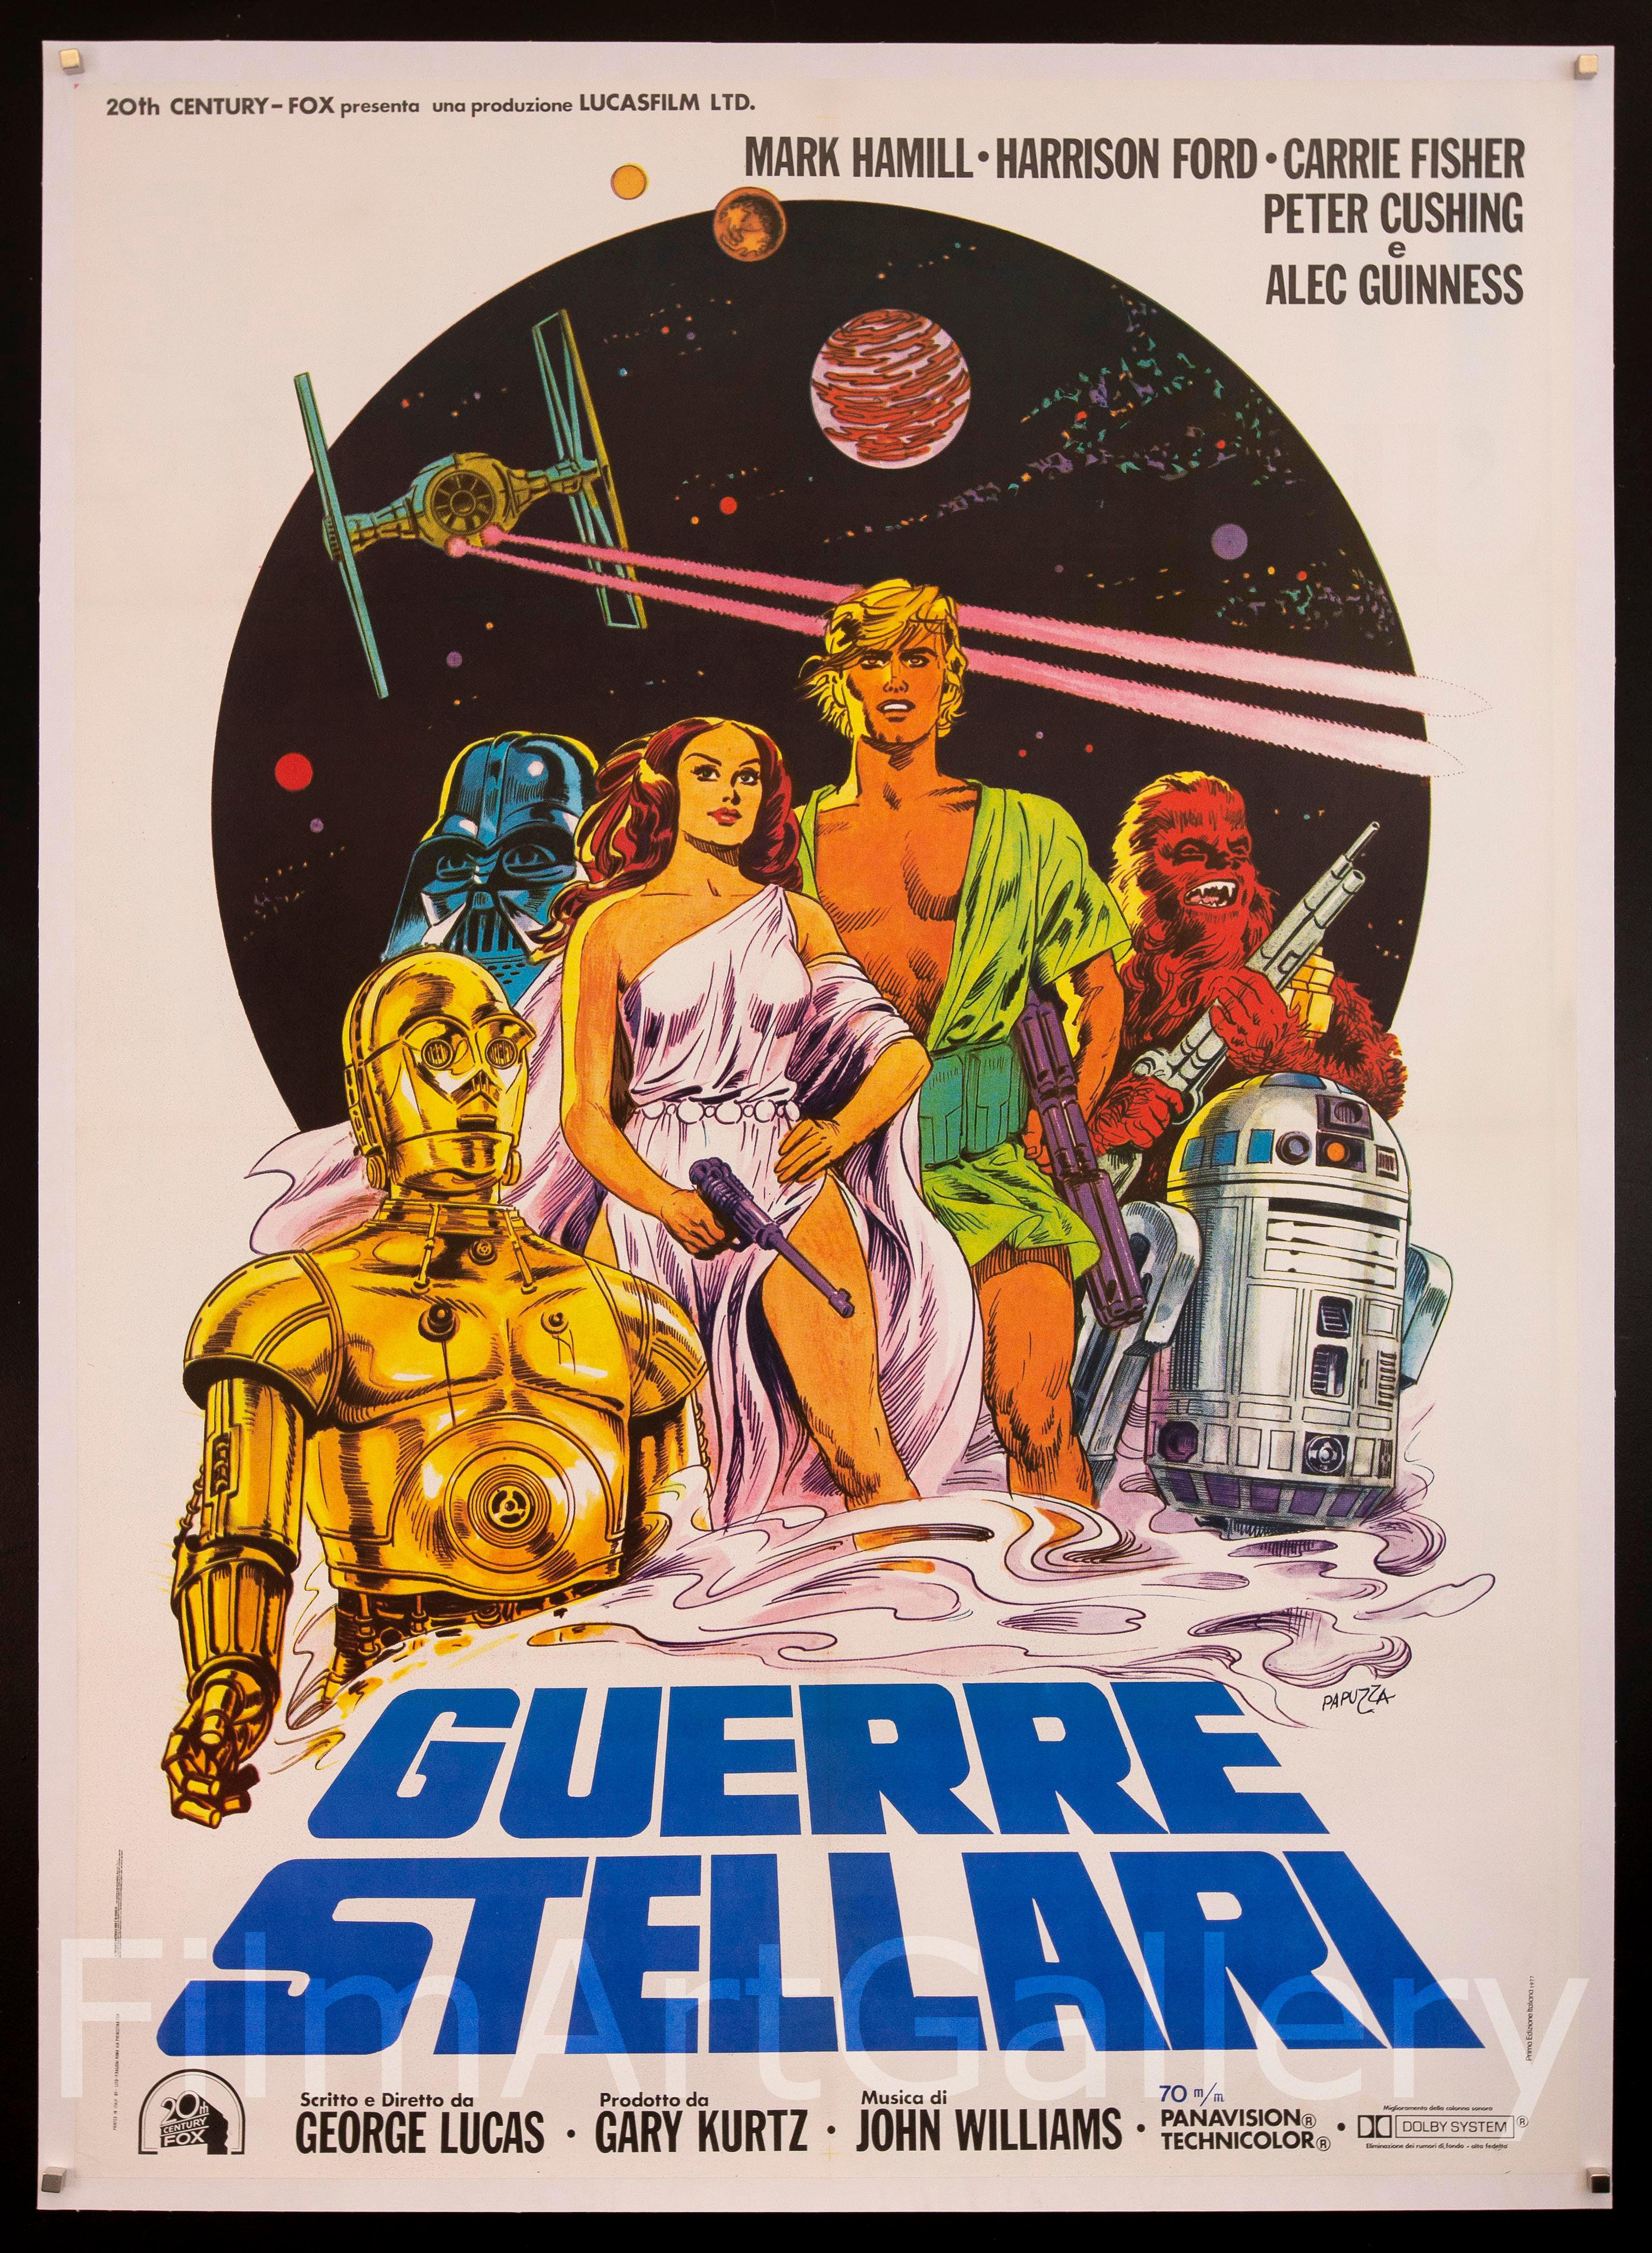 star wars poster art